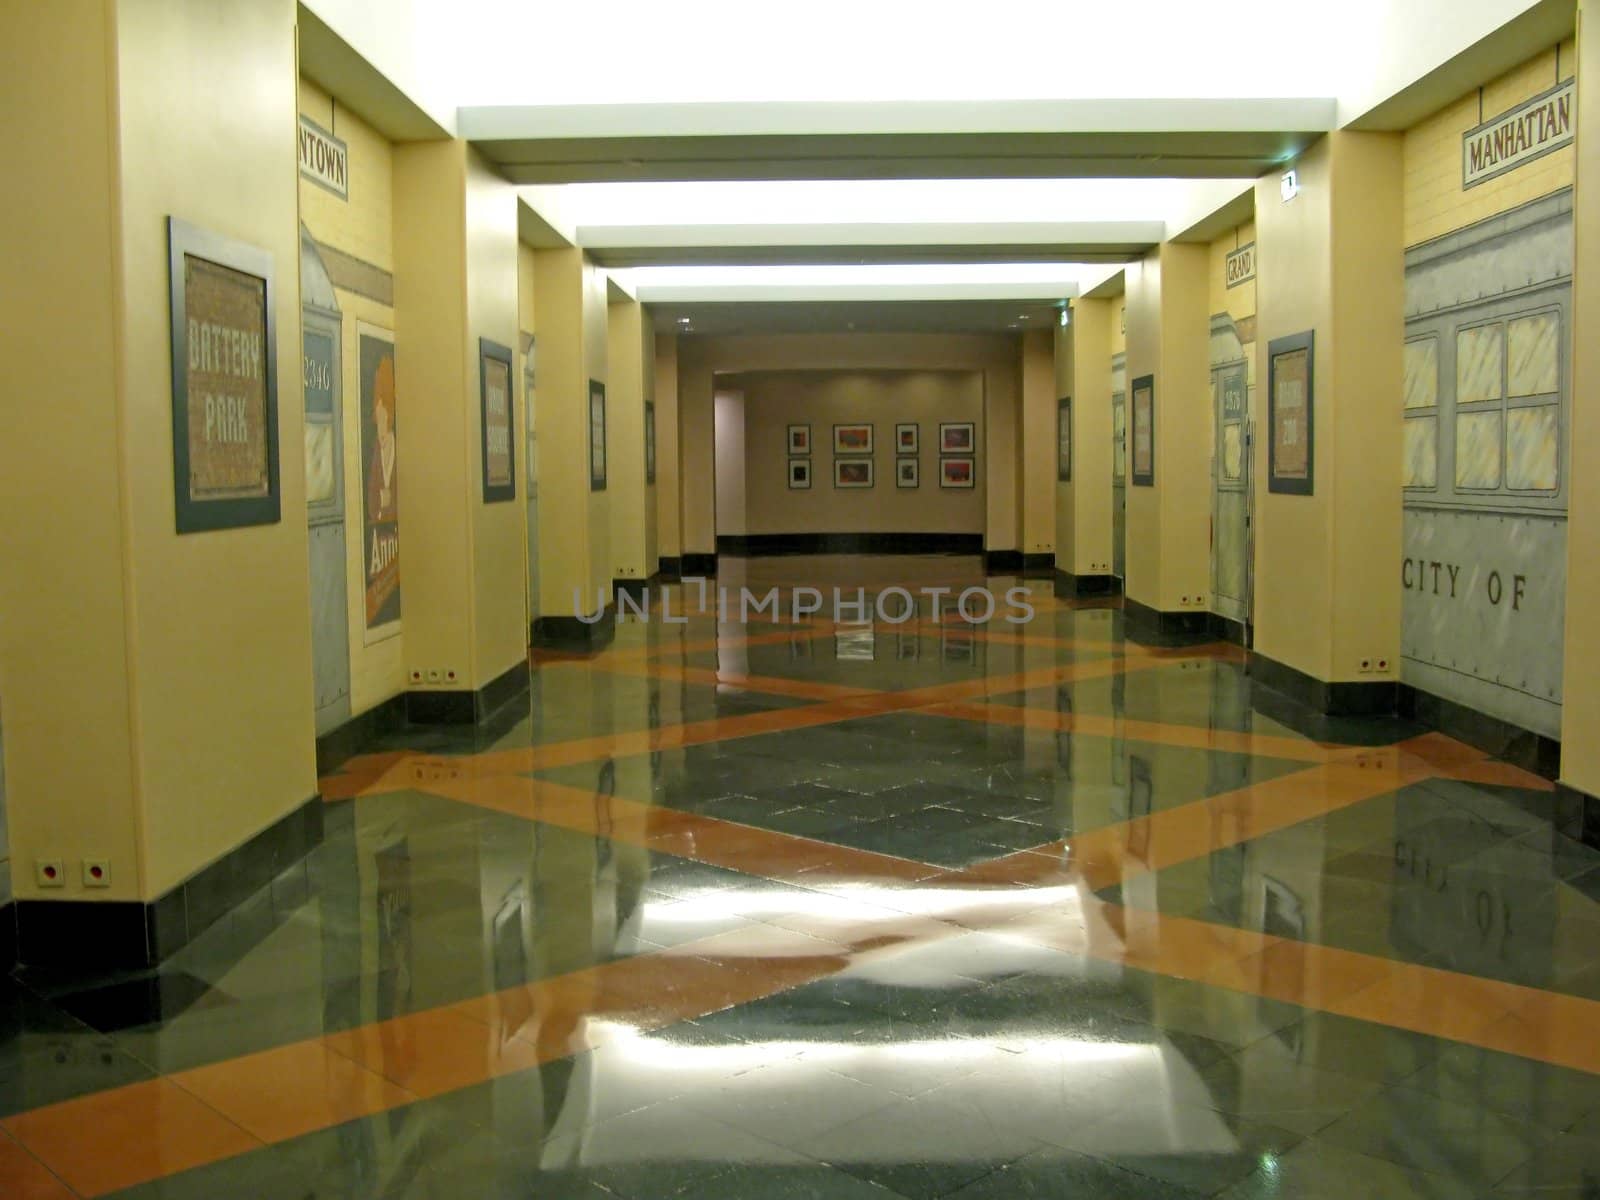 A look down a long hotel corridor